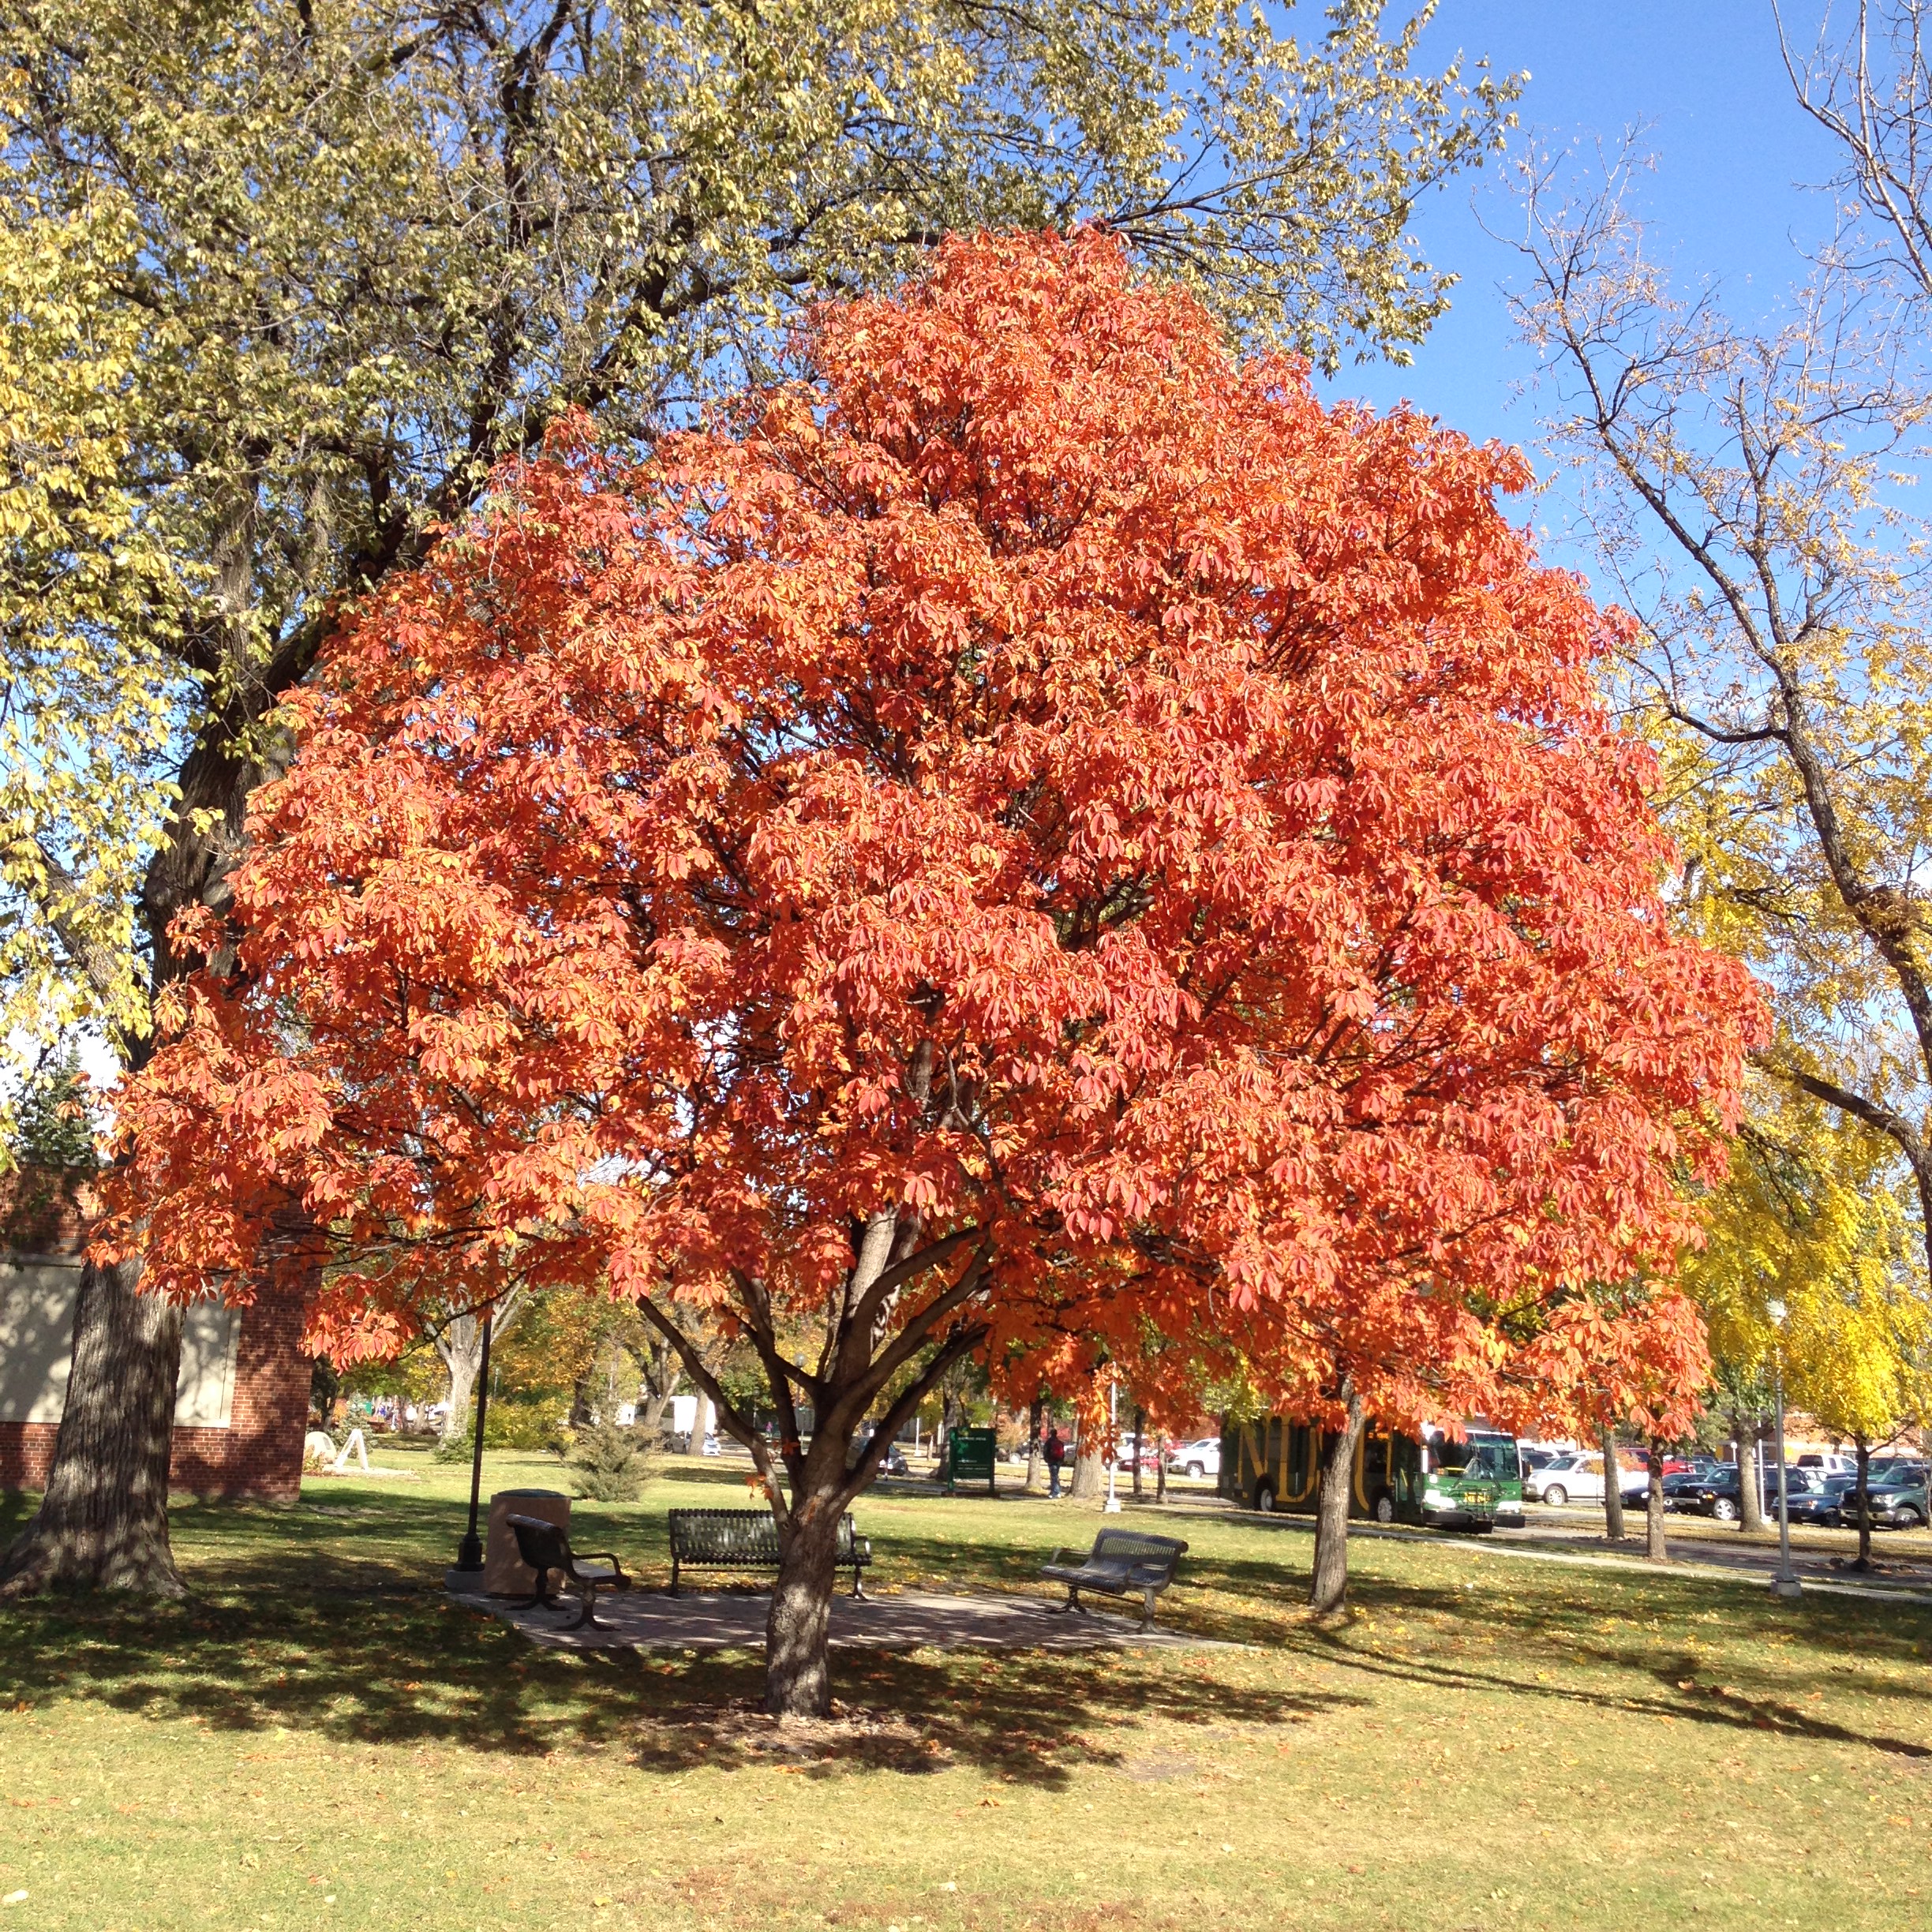 An Ohio buckeye shares its stunning fall foliage with the NDSU campus community. (NDSU photo)